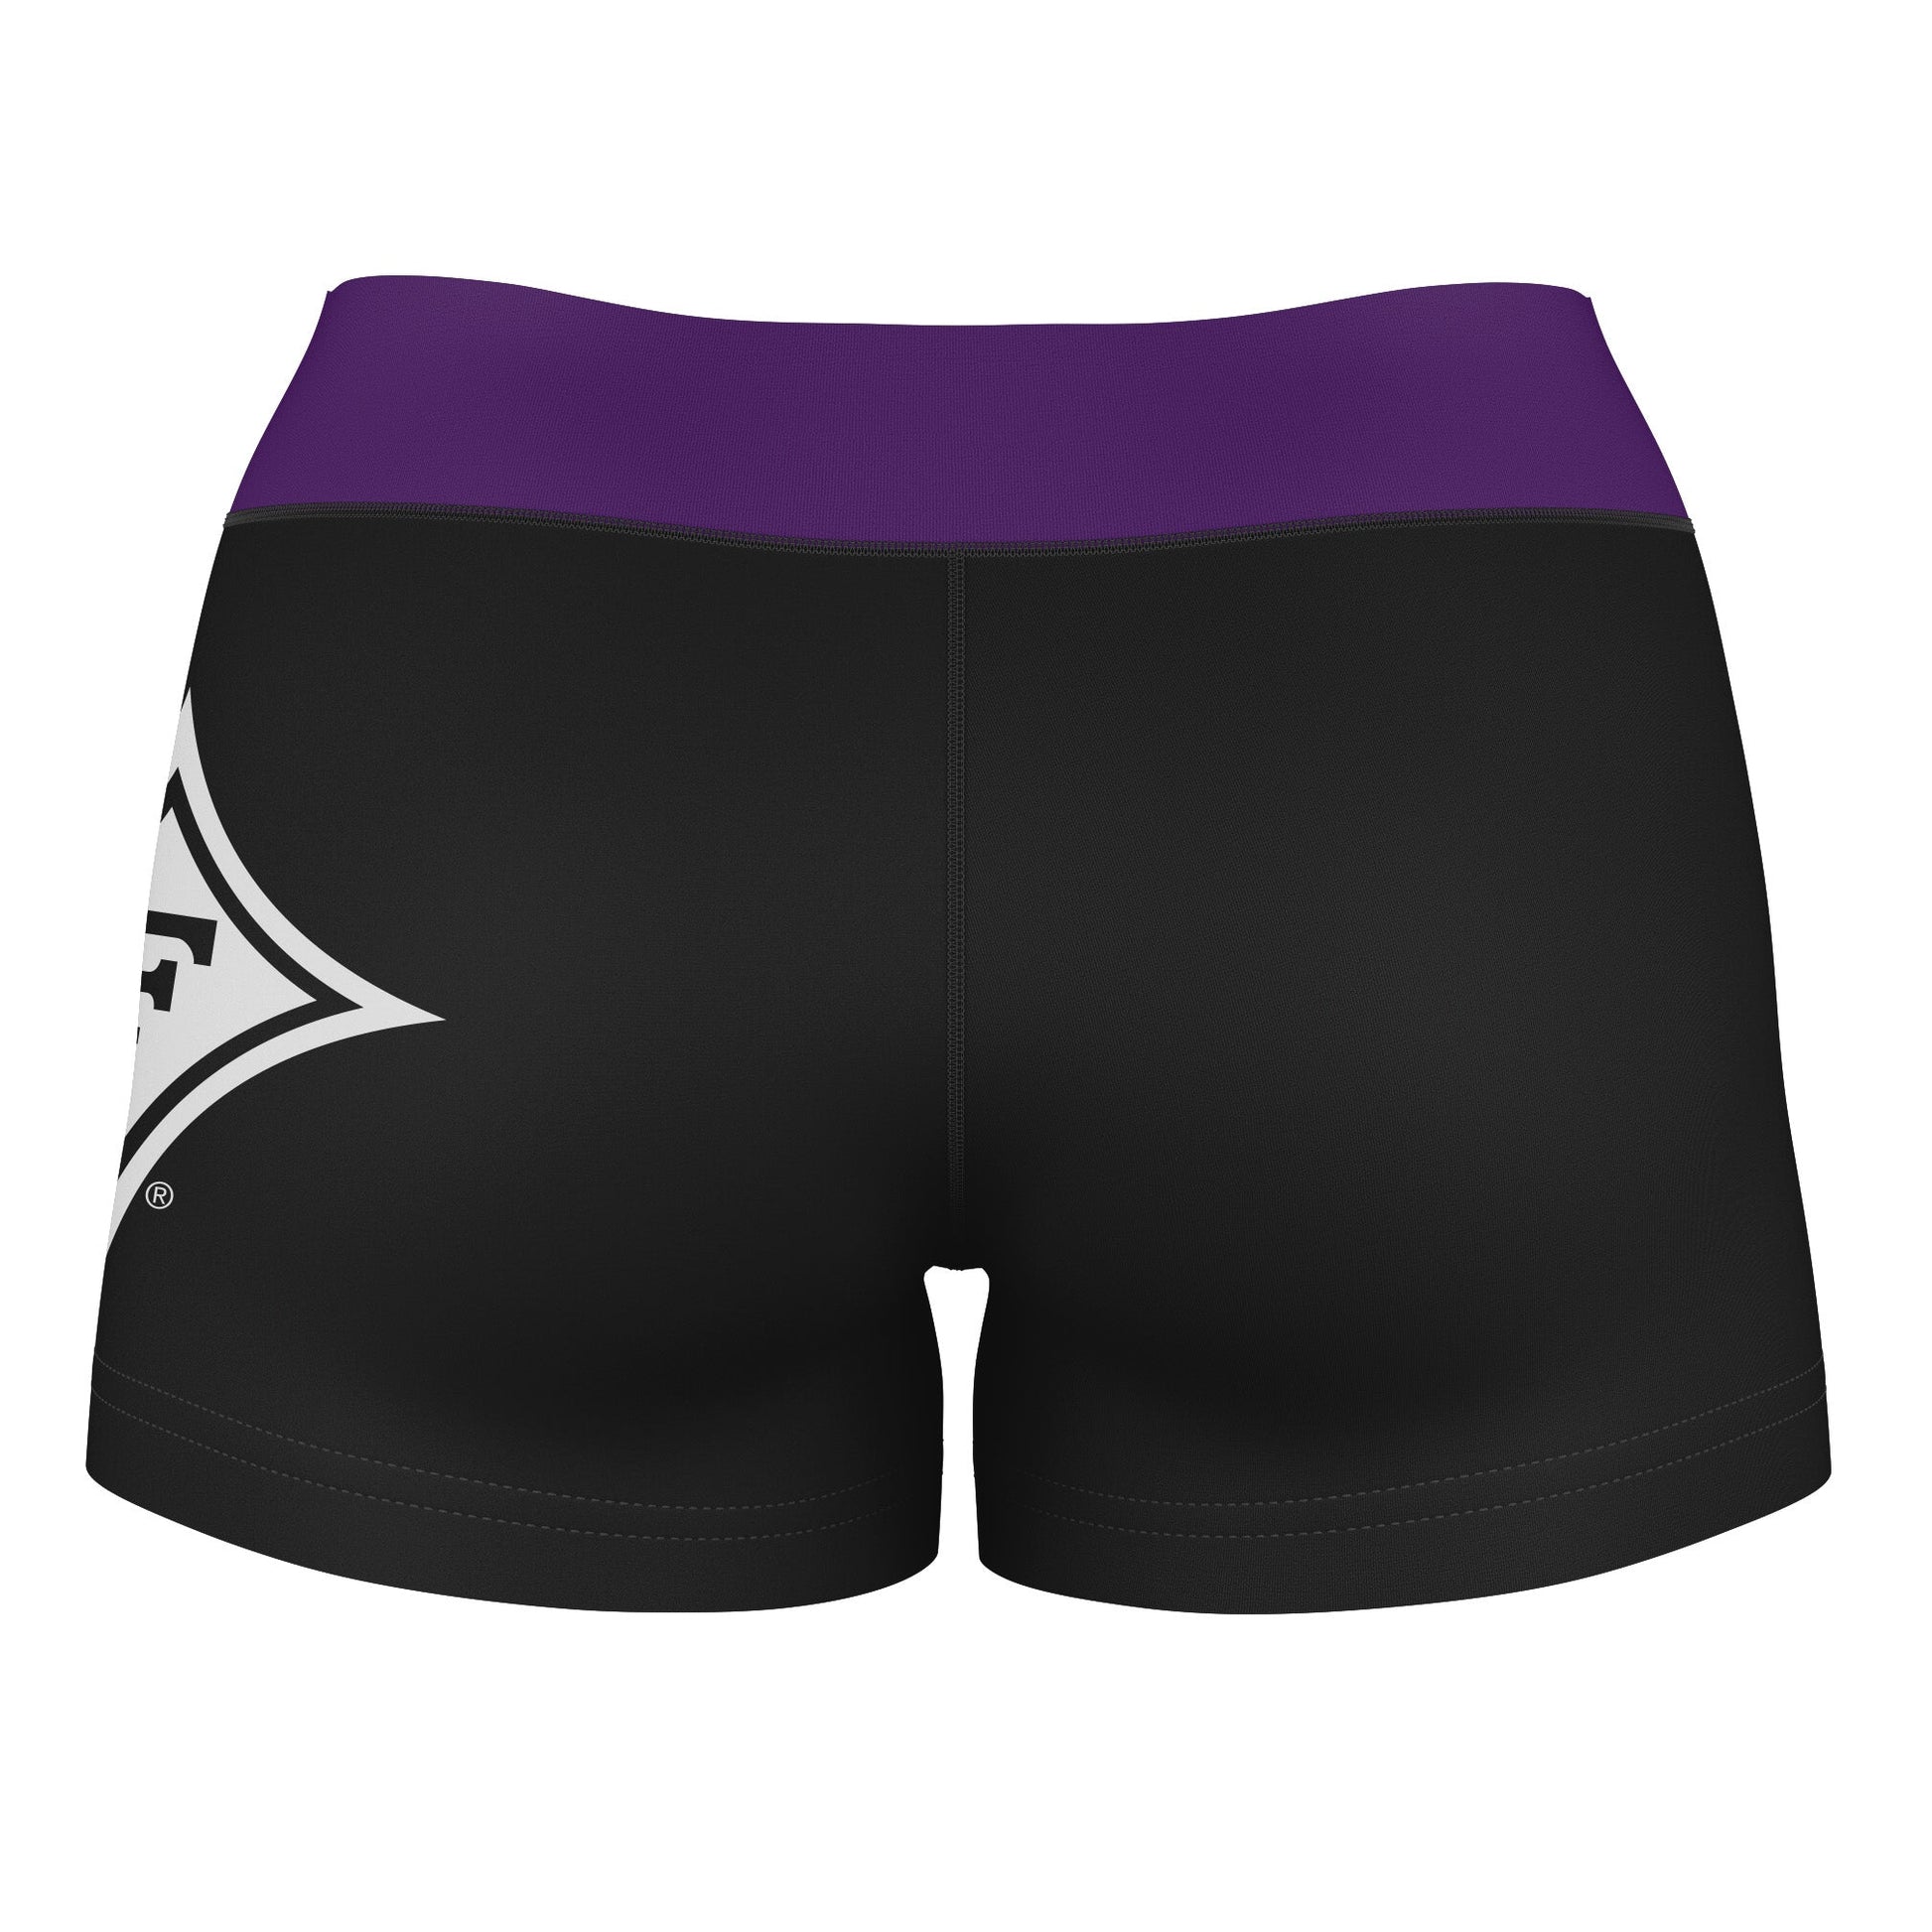 Furman Paladins Logo on Thigh and Waistband Black & Purple Womens Yoga